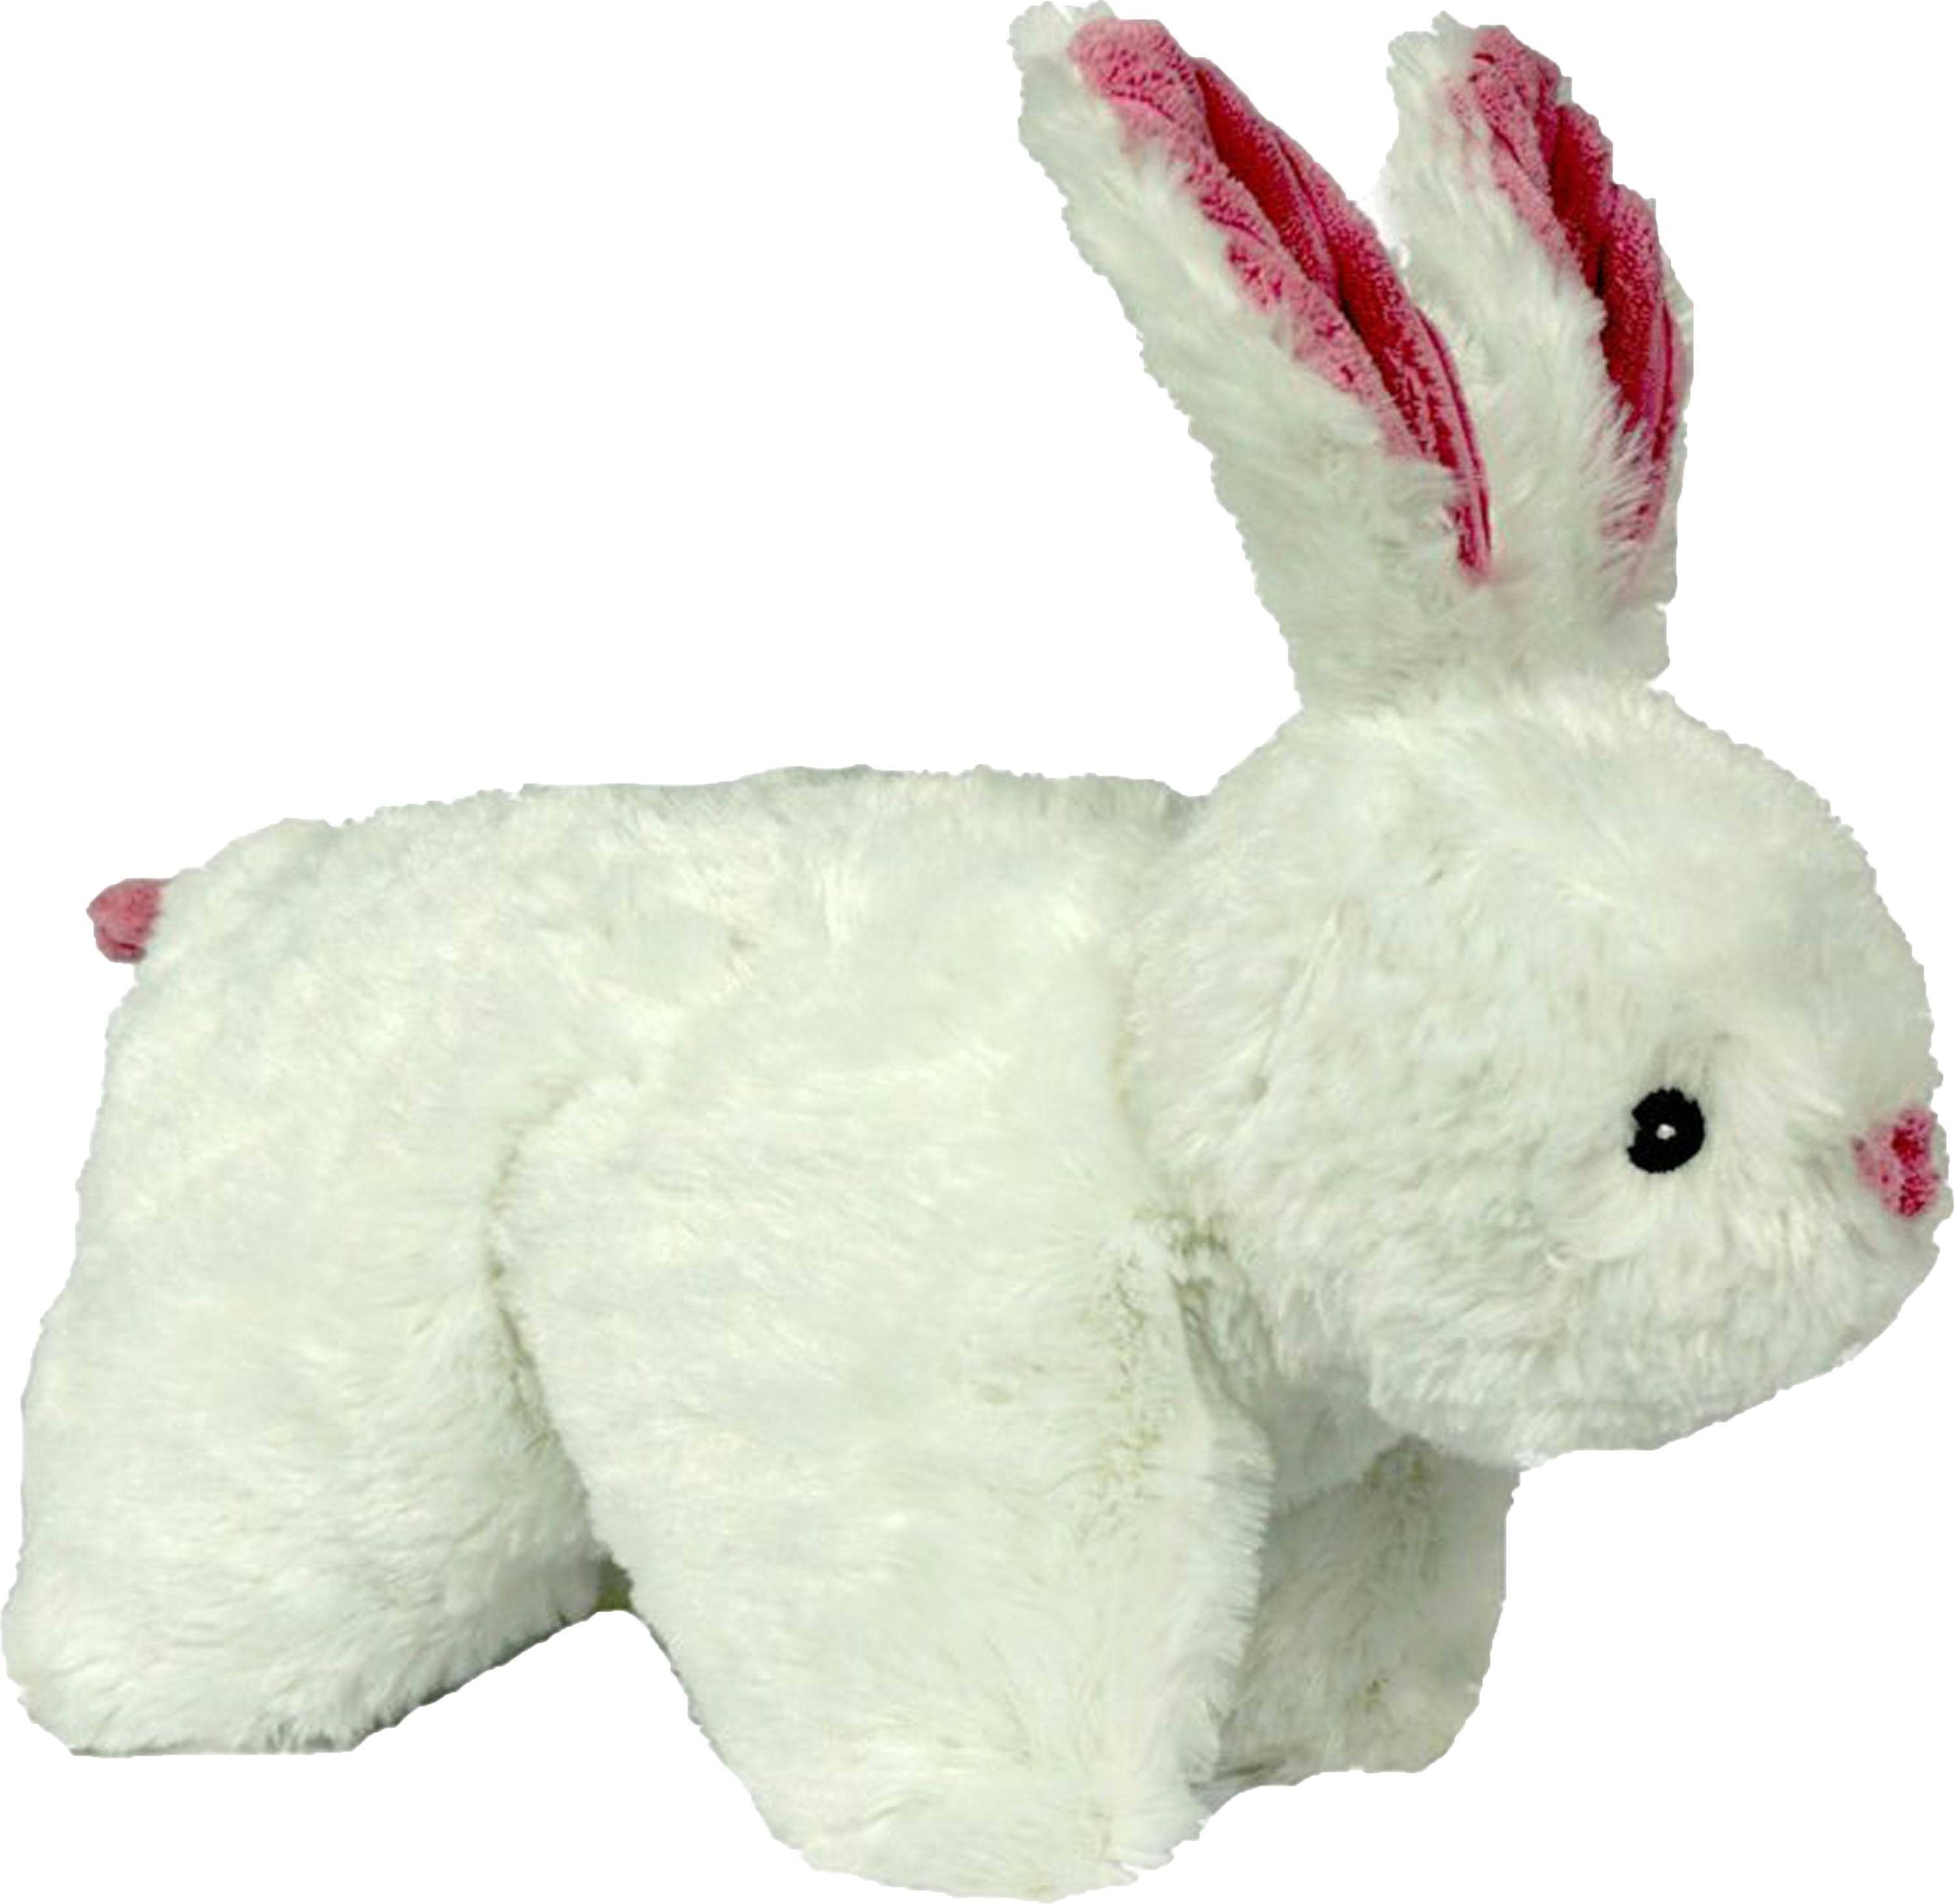 Hugglehounds Knot-less Squooshie Bunny Plush - White